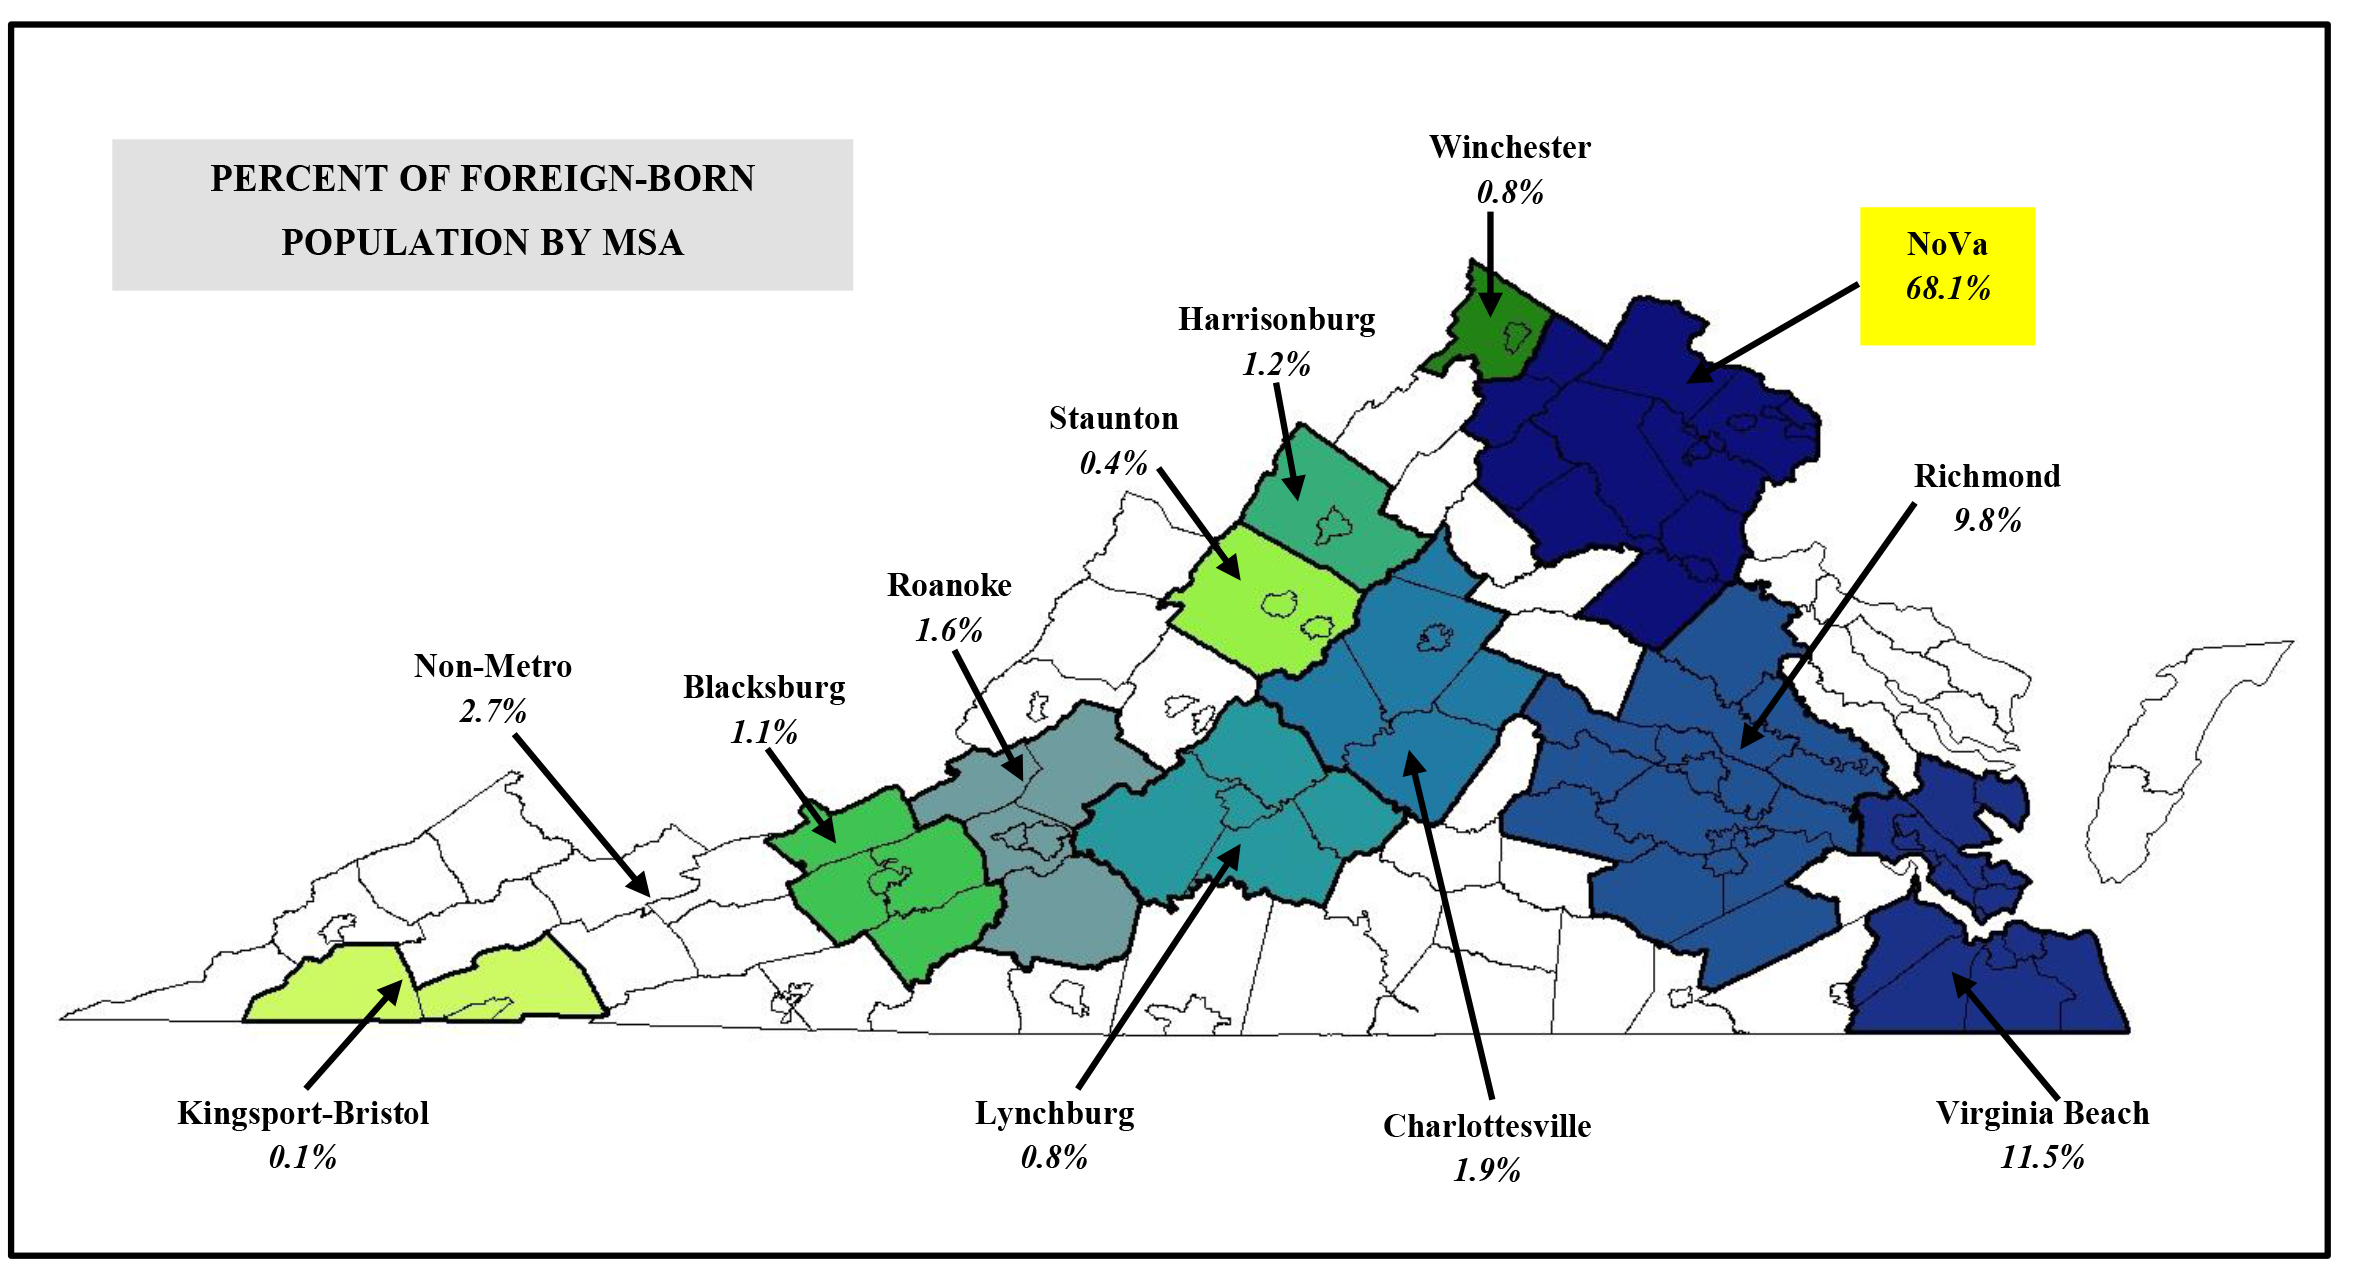 Map of virginia showing the percentage of foreign-born population by MSA.  Winchester: 0.8%. NoVA 68.1%. Richmond: 9.8%. Virginia Beach: 11.5%. Charlottesville: 1.9%. Lynchburg: 0/8%. Bristol: 0/1%. Non-metro: 2.7%. Blacksburg: 1.1%. Roanoke: 1.6%. Staunton: 0/4%. Harrisonburg: 1.2%.